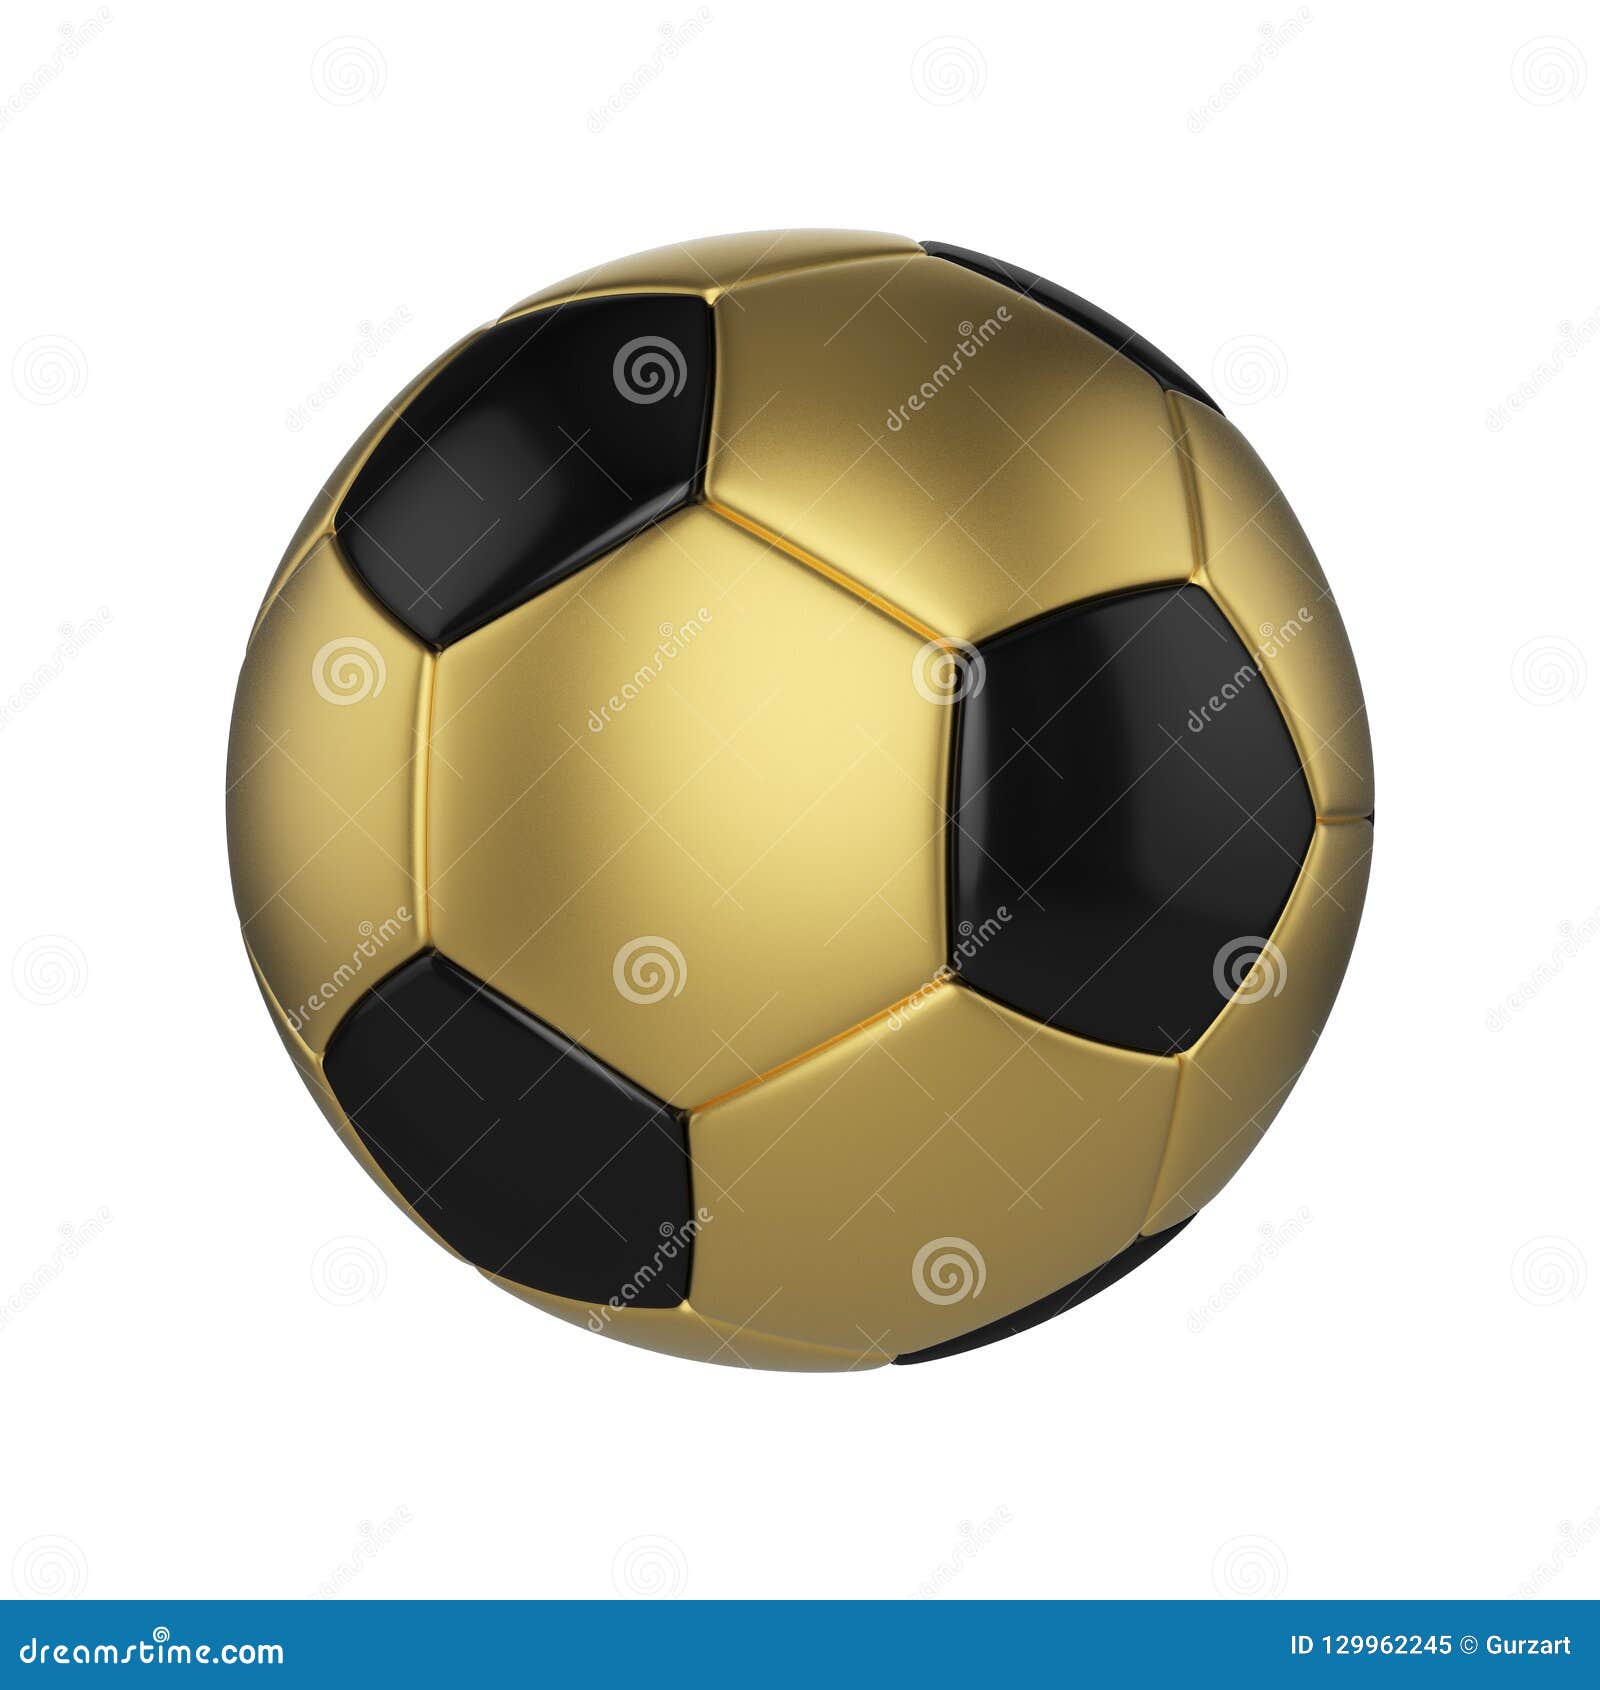 Soccer Ball Isolated on White Background. Black and Gold Football Ball  Stock Illustration - Illustration of black, design: 129962245